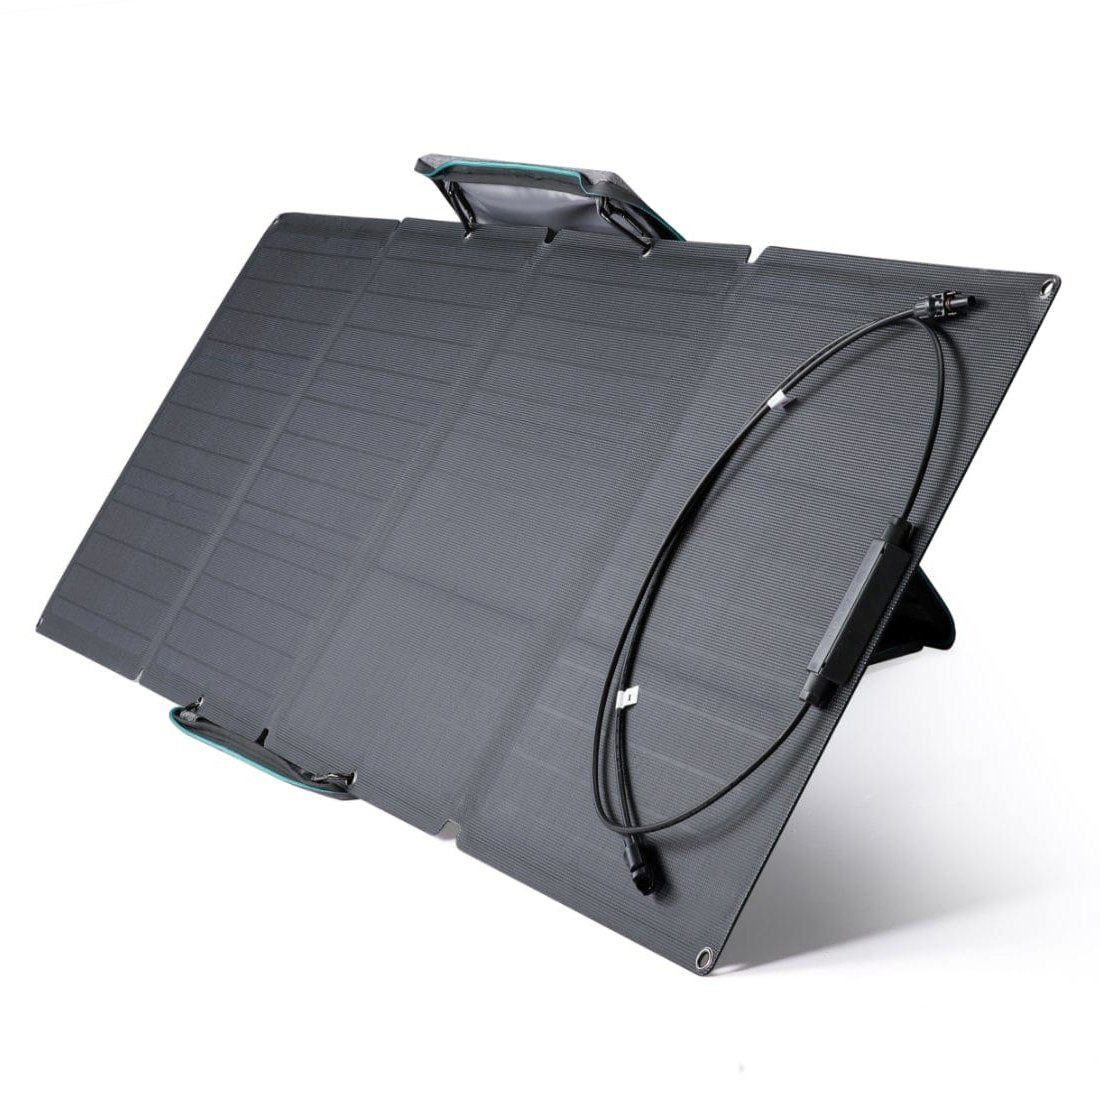 2 Pro mit Powerstation Solarpanel River Smart-Home-Station Ecoflow Ecoflow 110W